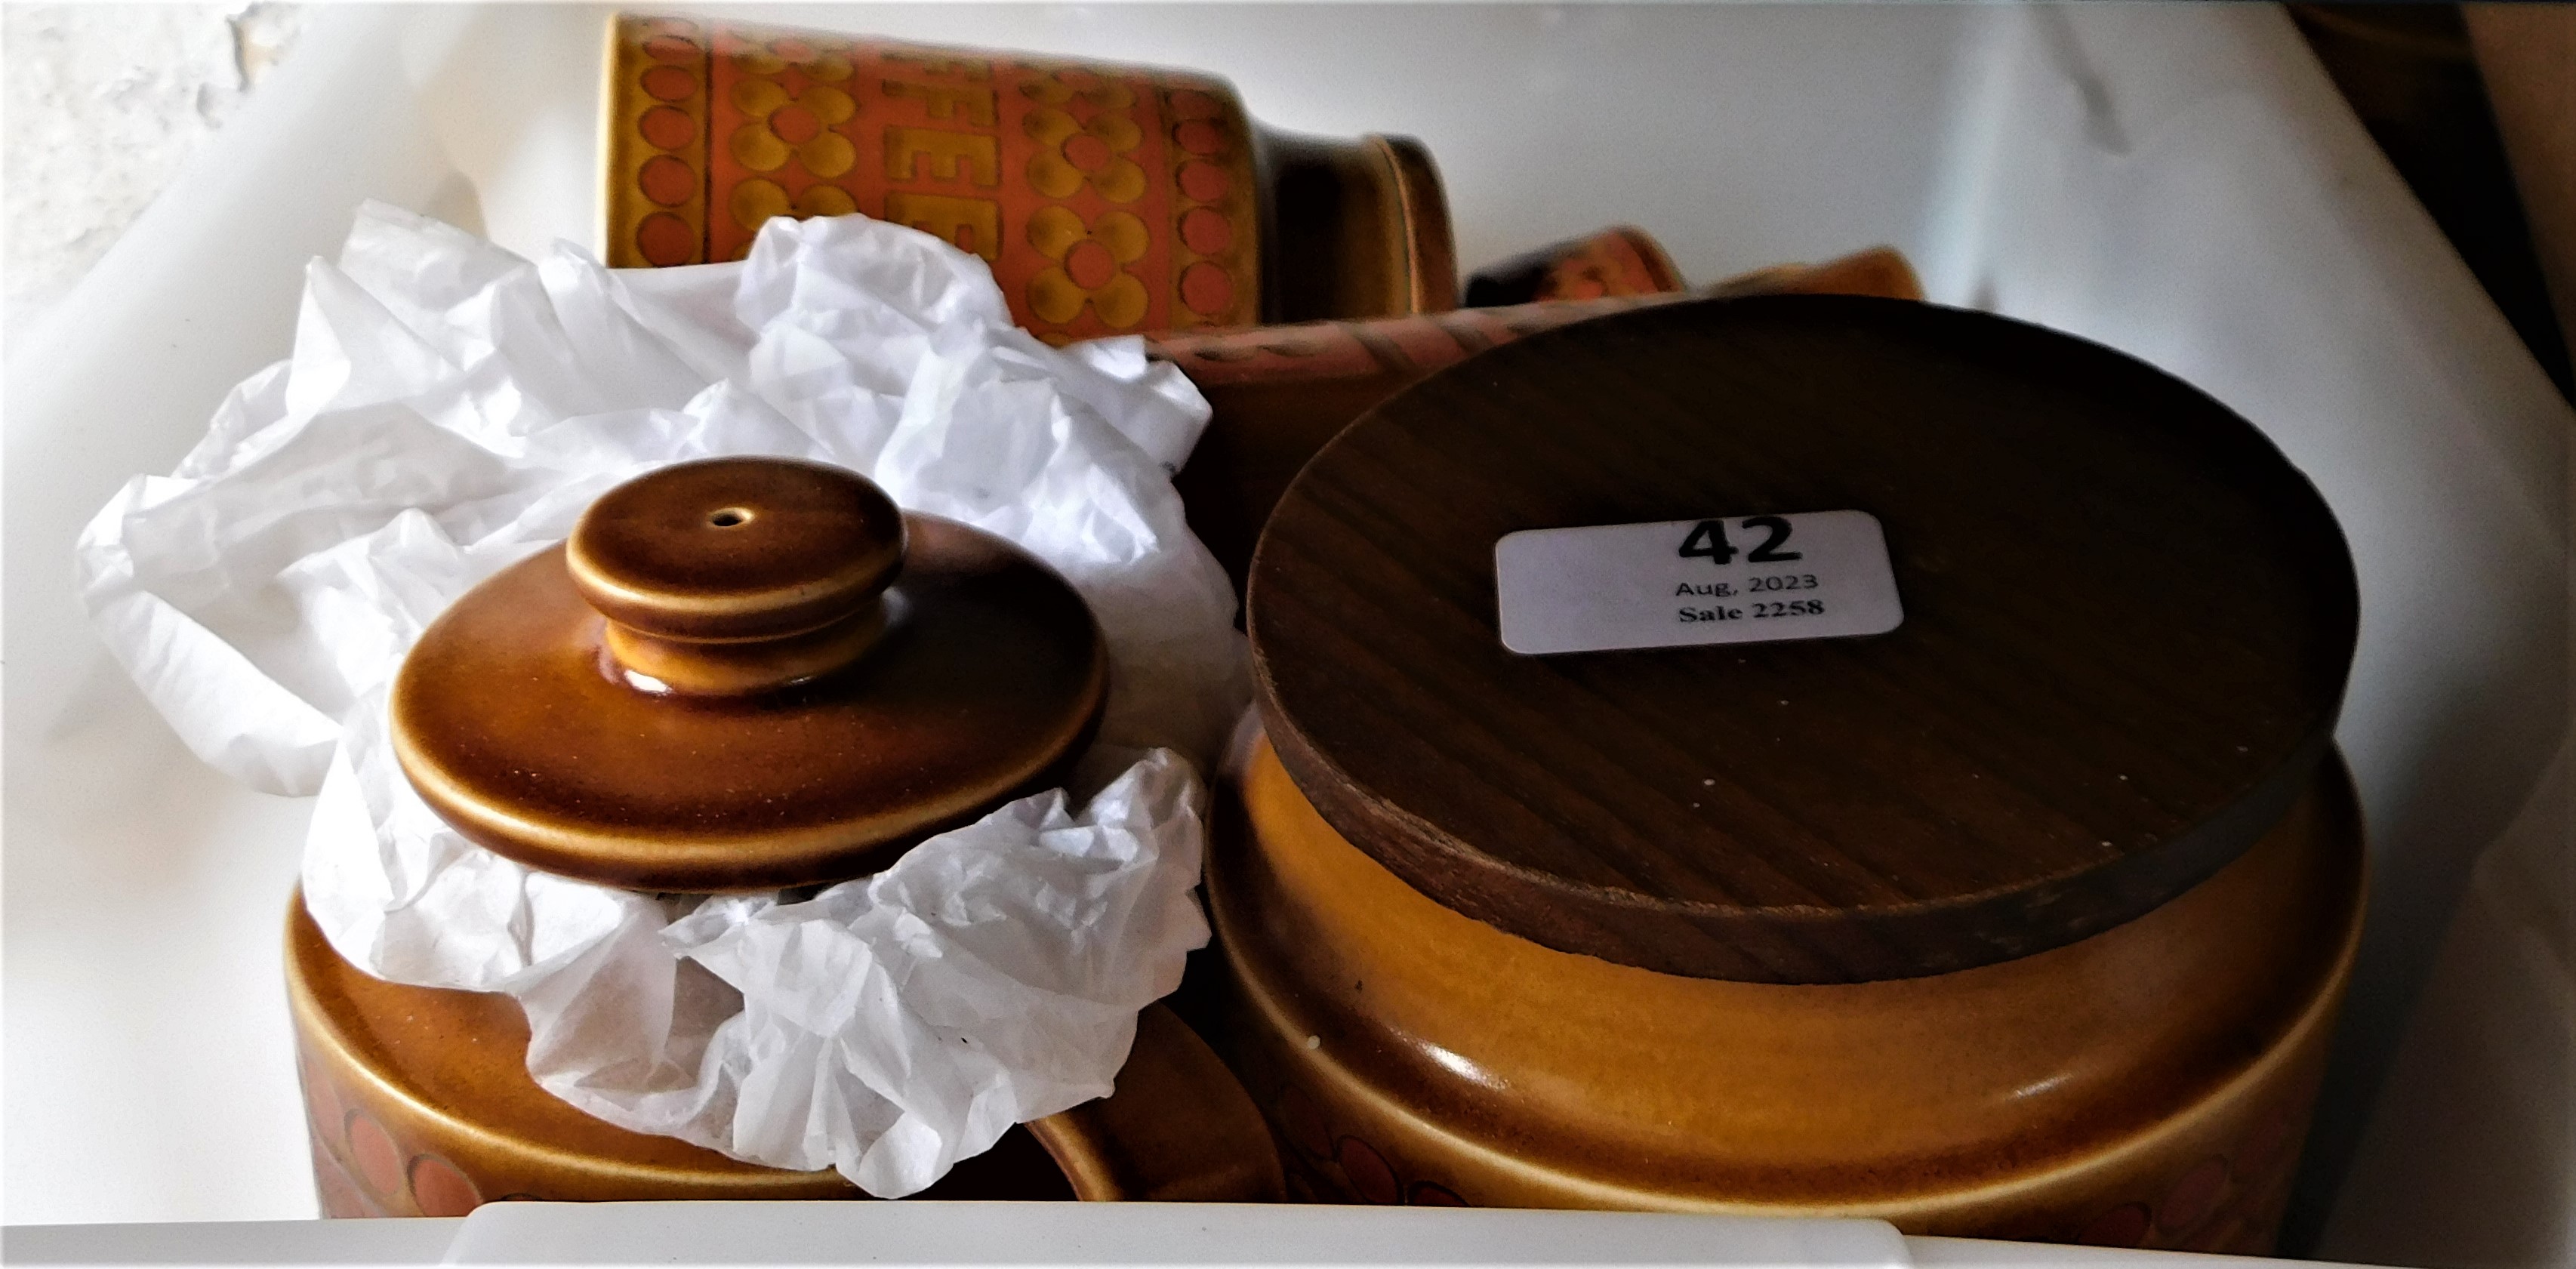 Vintage Hornsea 'Saffron' Tea & Coffee Set - Item from Hornsea Pottery's 'Saffron' range, storage